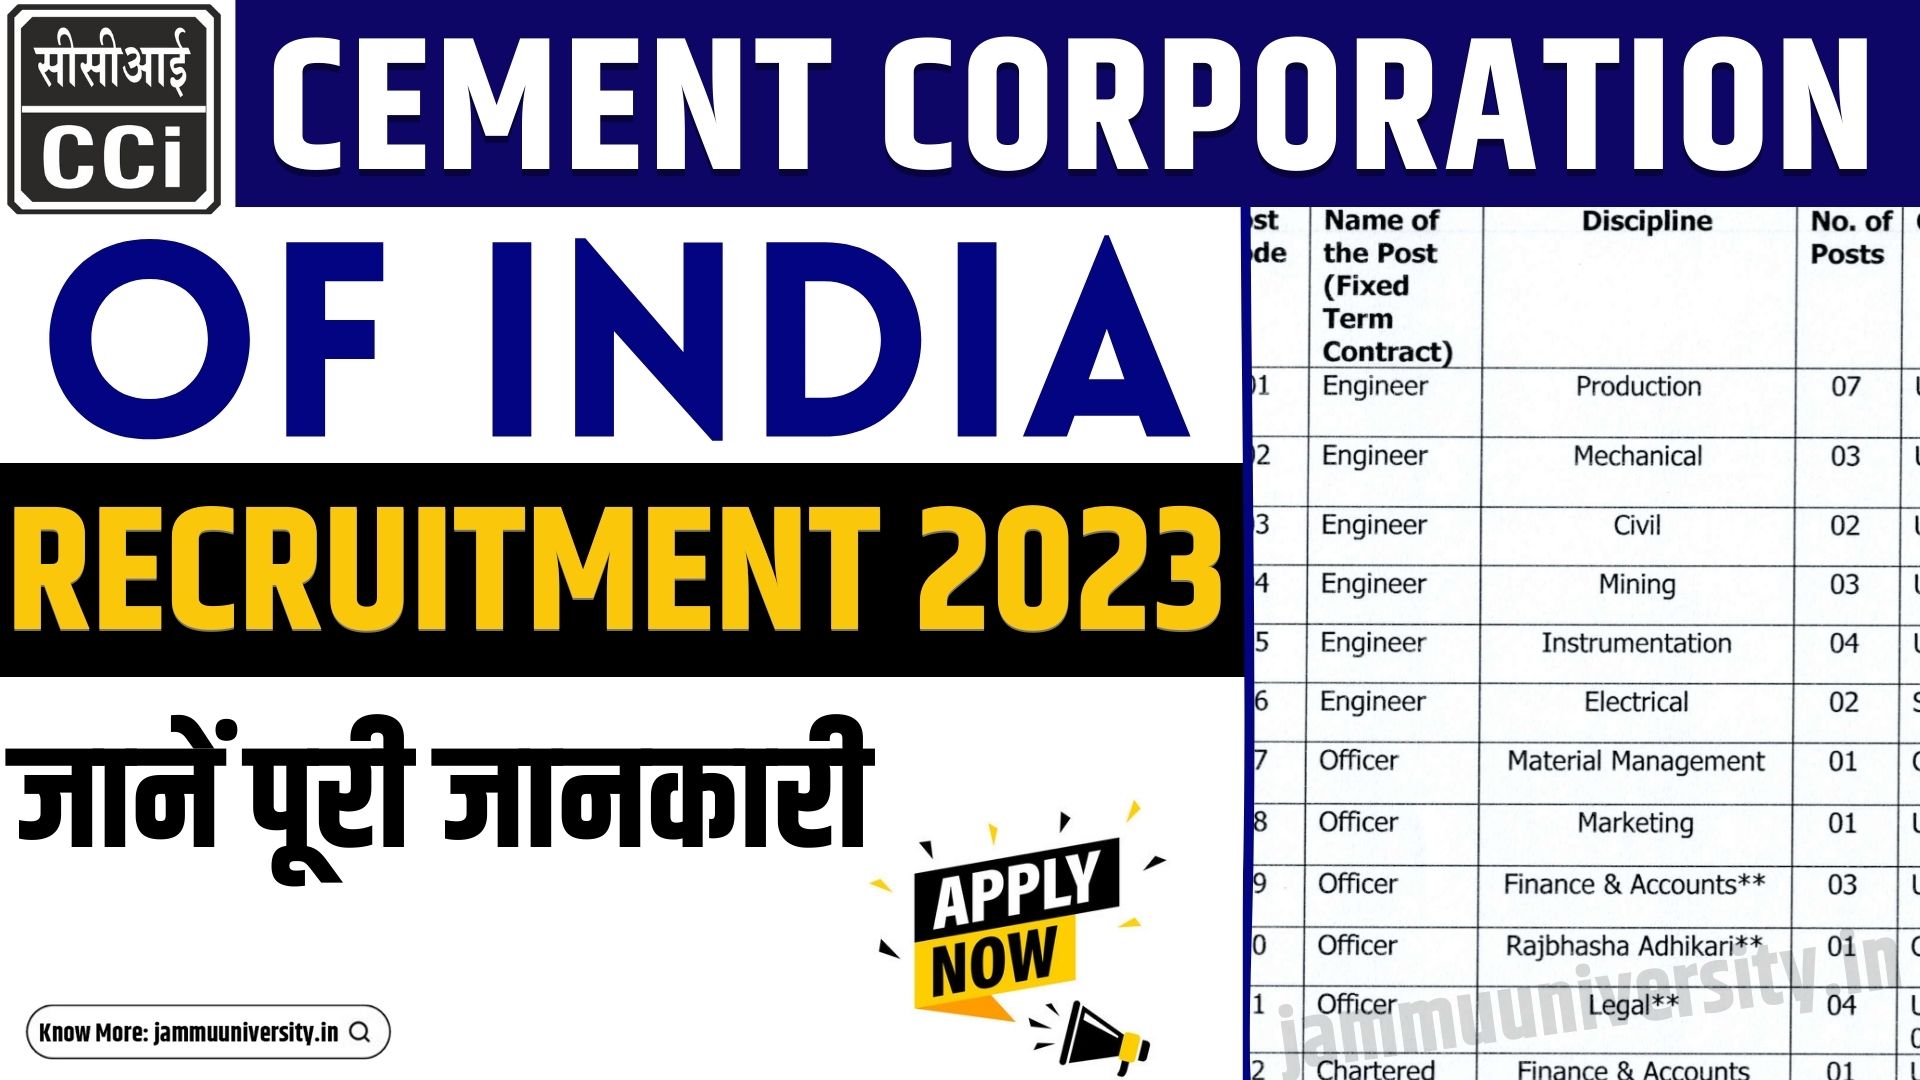 Cement Corporation of India Recruitment 2023